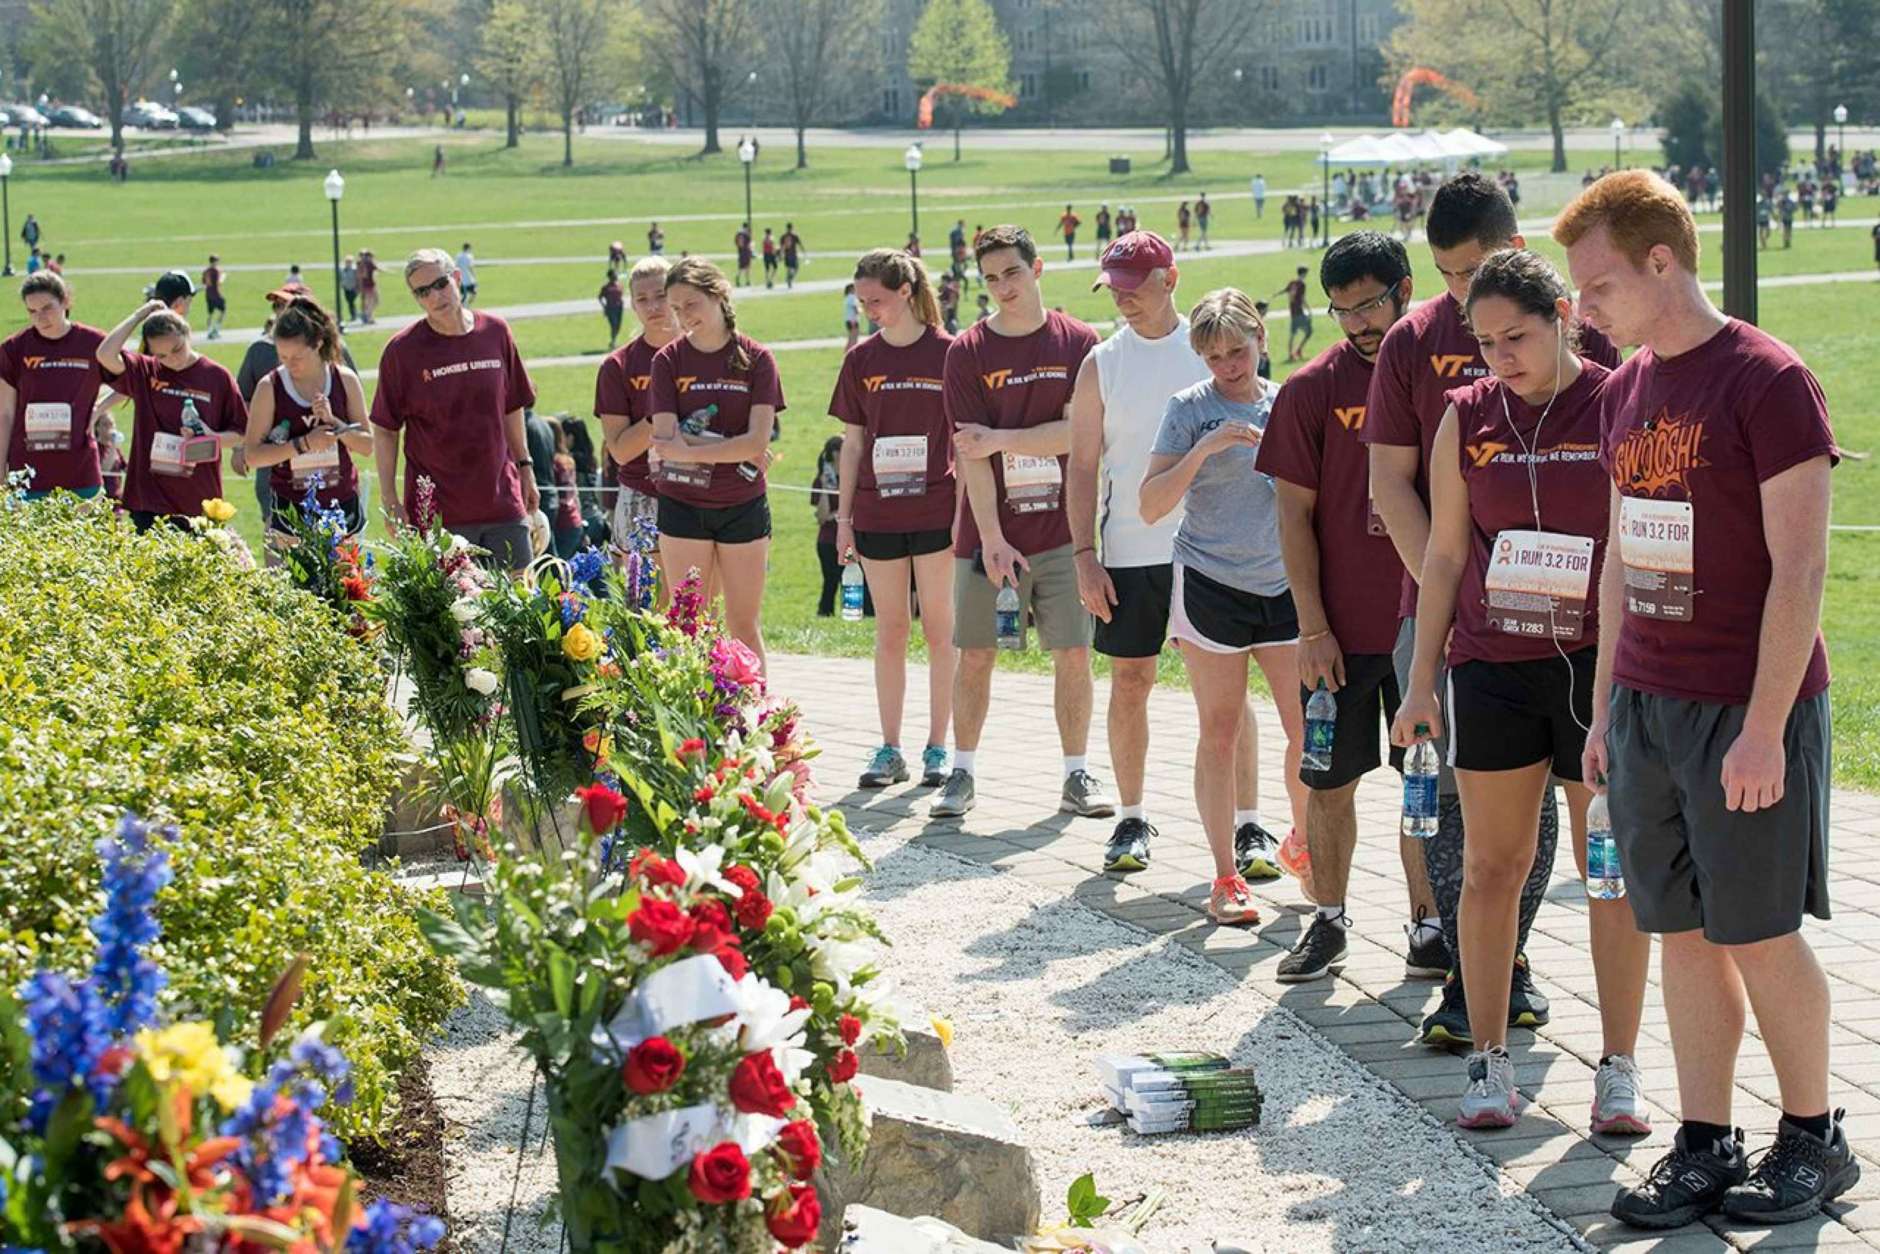 Participants in the 3.2-Mile Run in Remembrance visit the April 16 Memorial on Saturday, April 15, 2017. (Courtesy Virginia Tech)